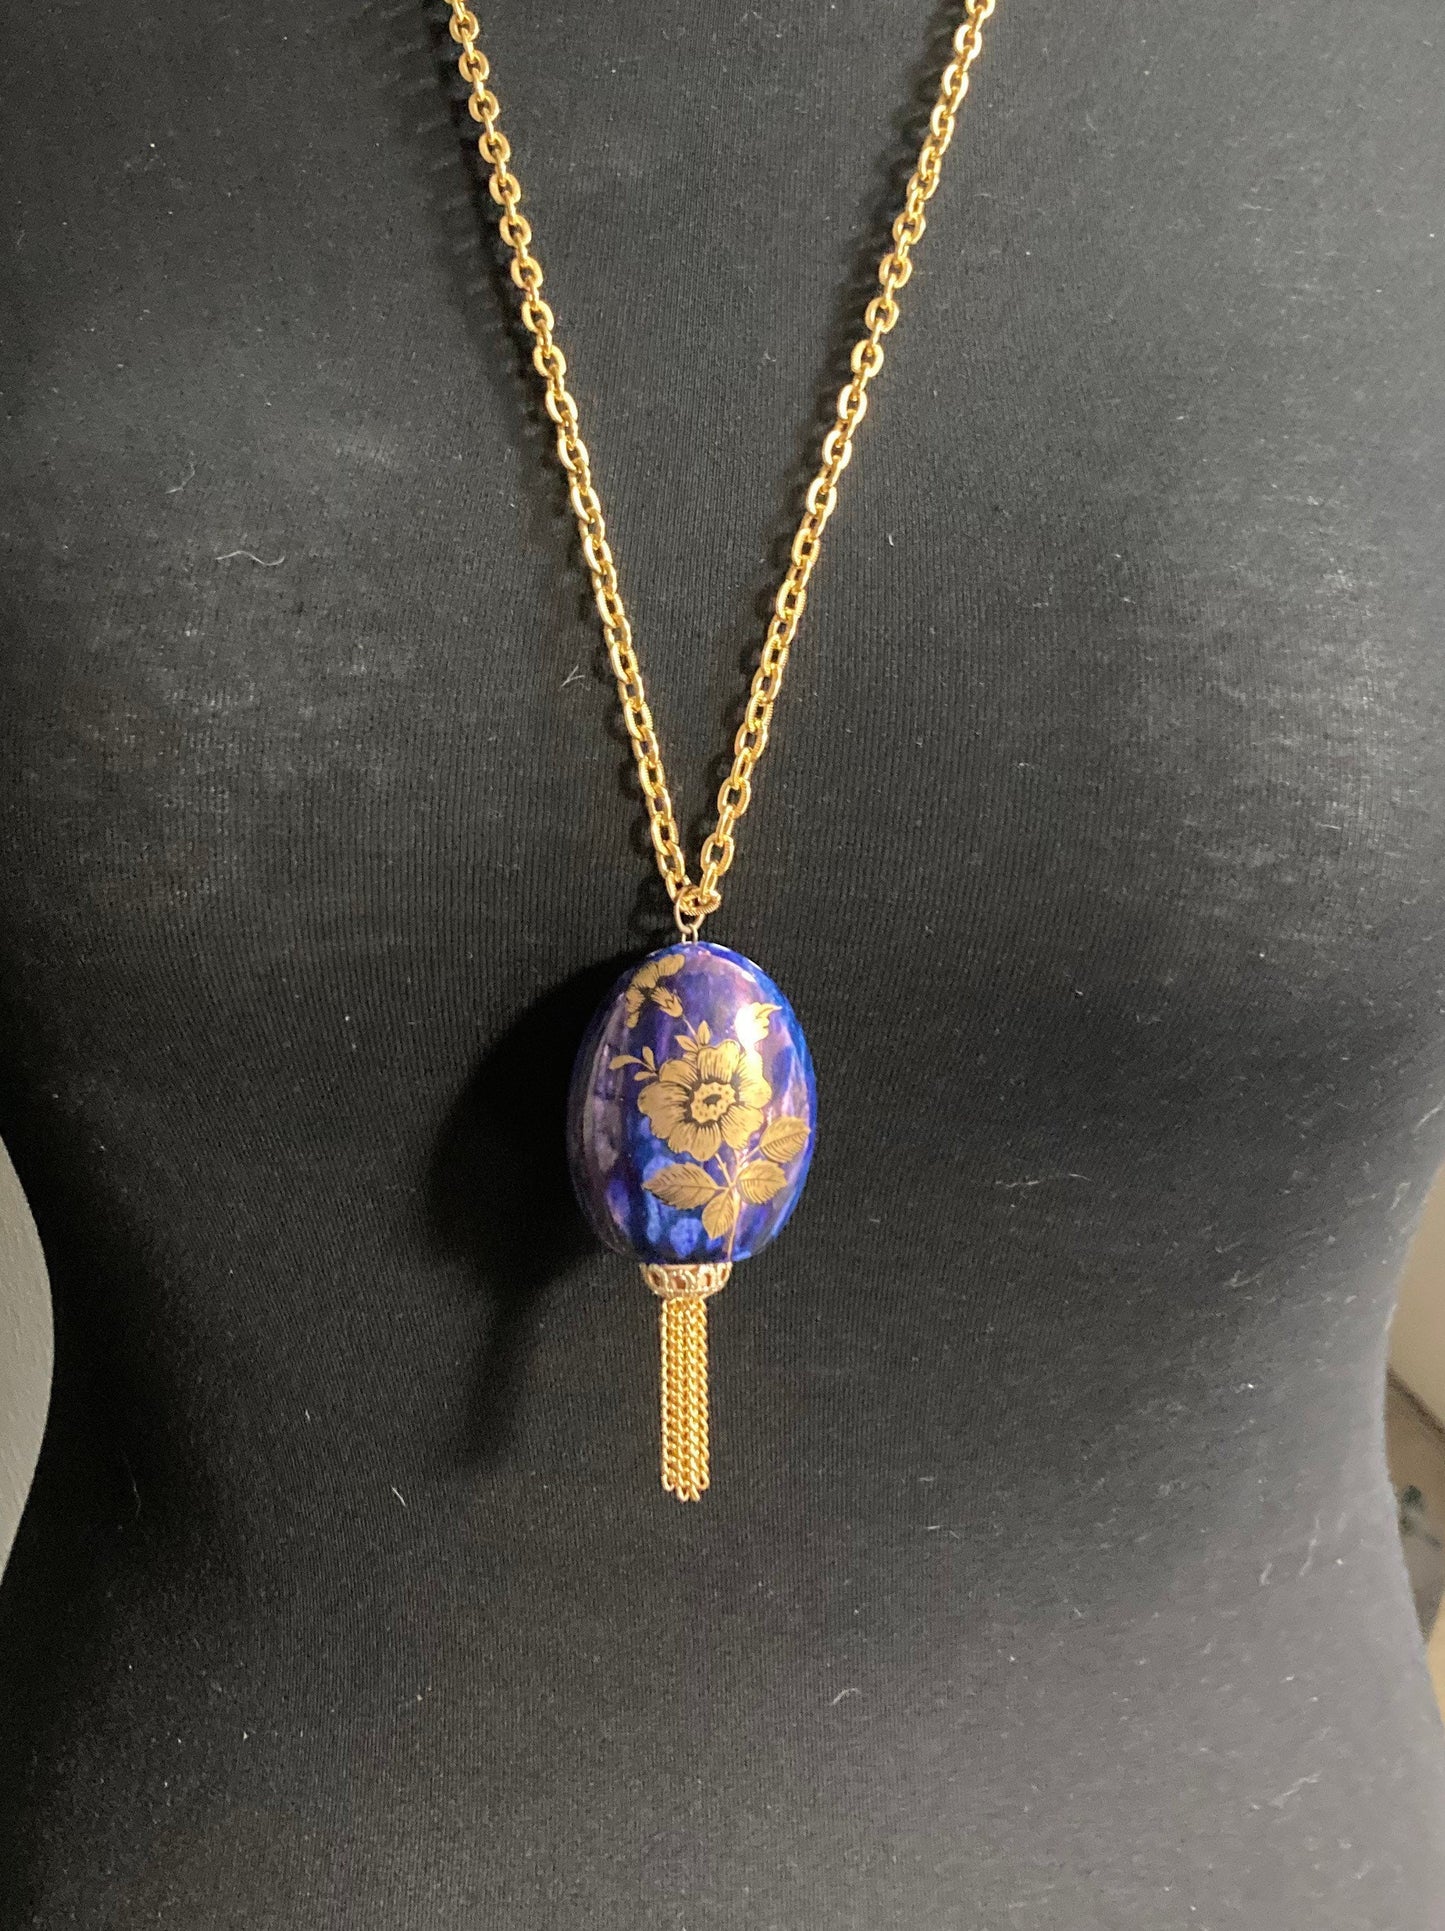 blue ceramic Pomander Pendant Necklace gold transfer printed ornate Vintage 1970s